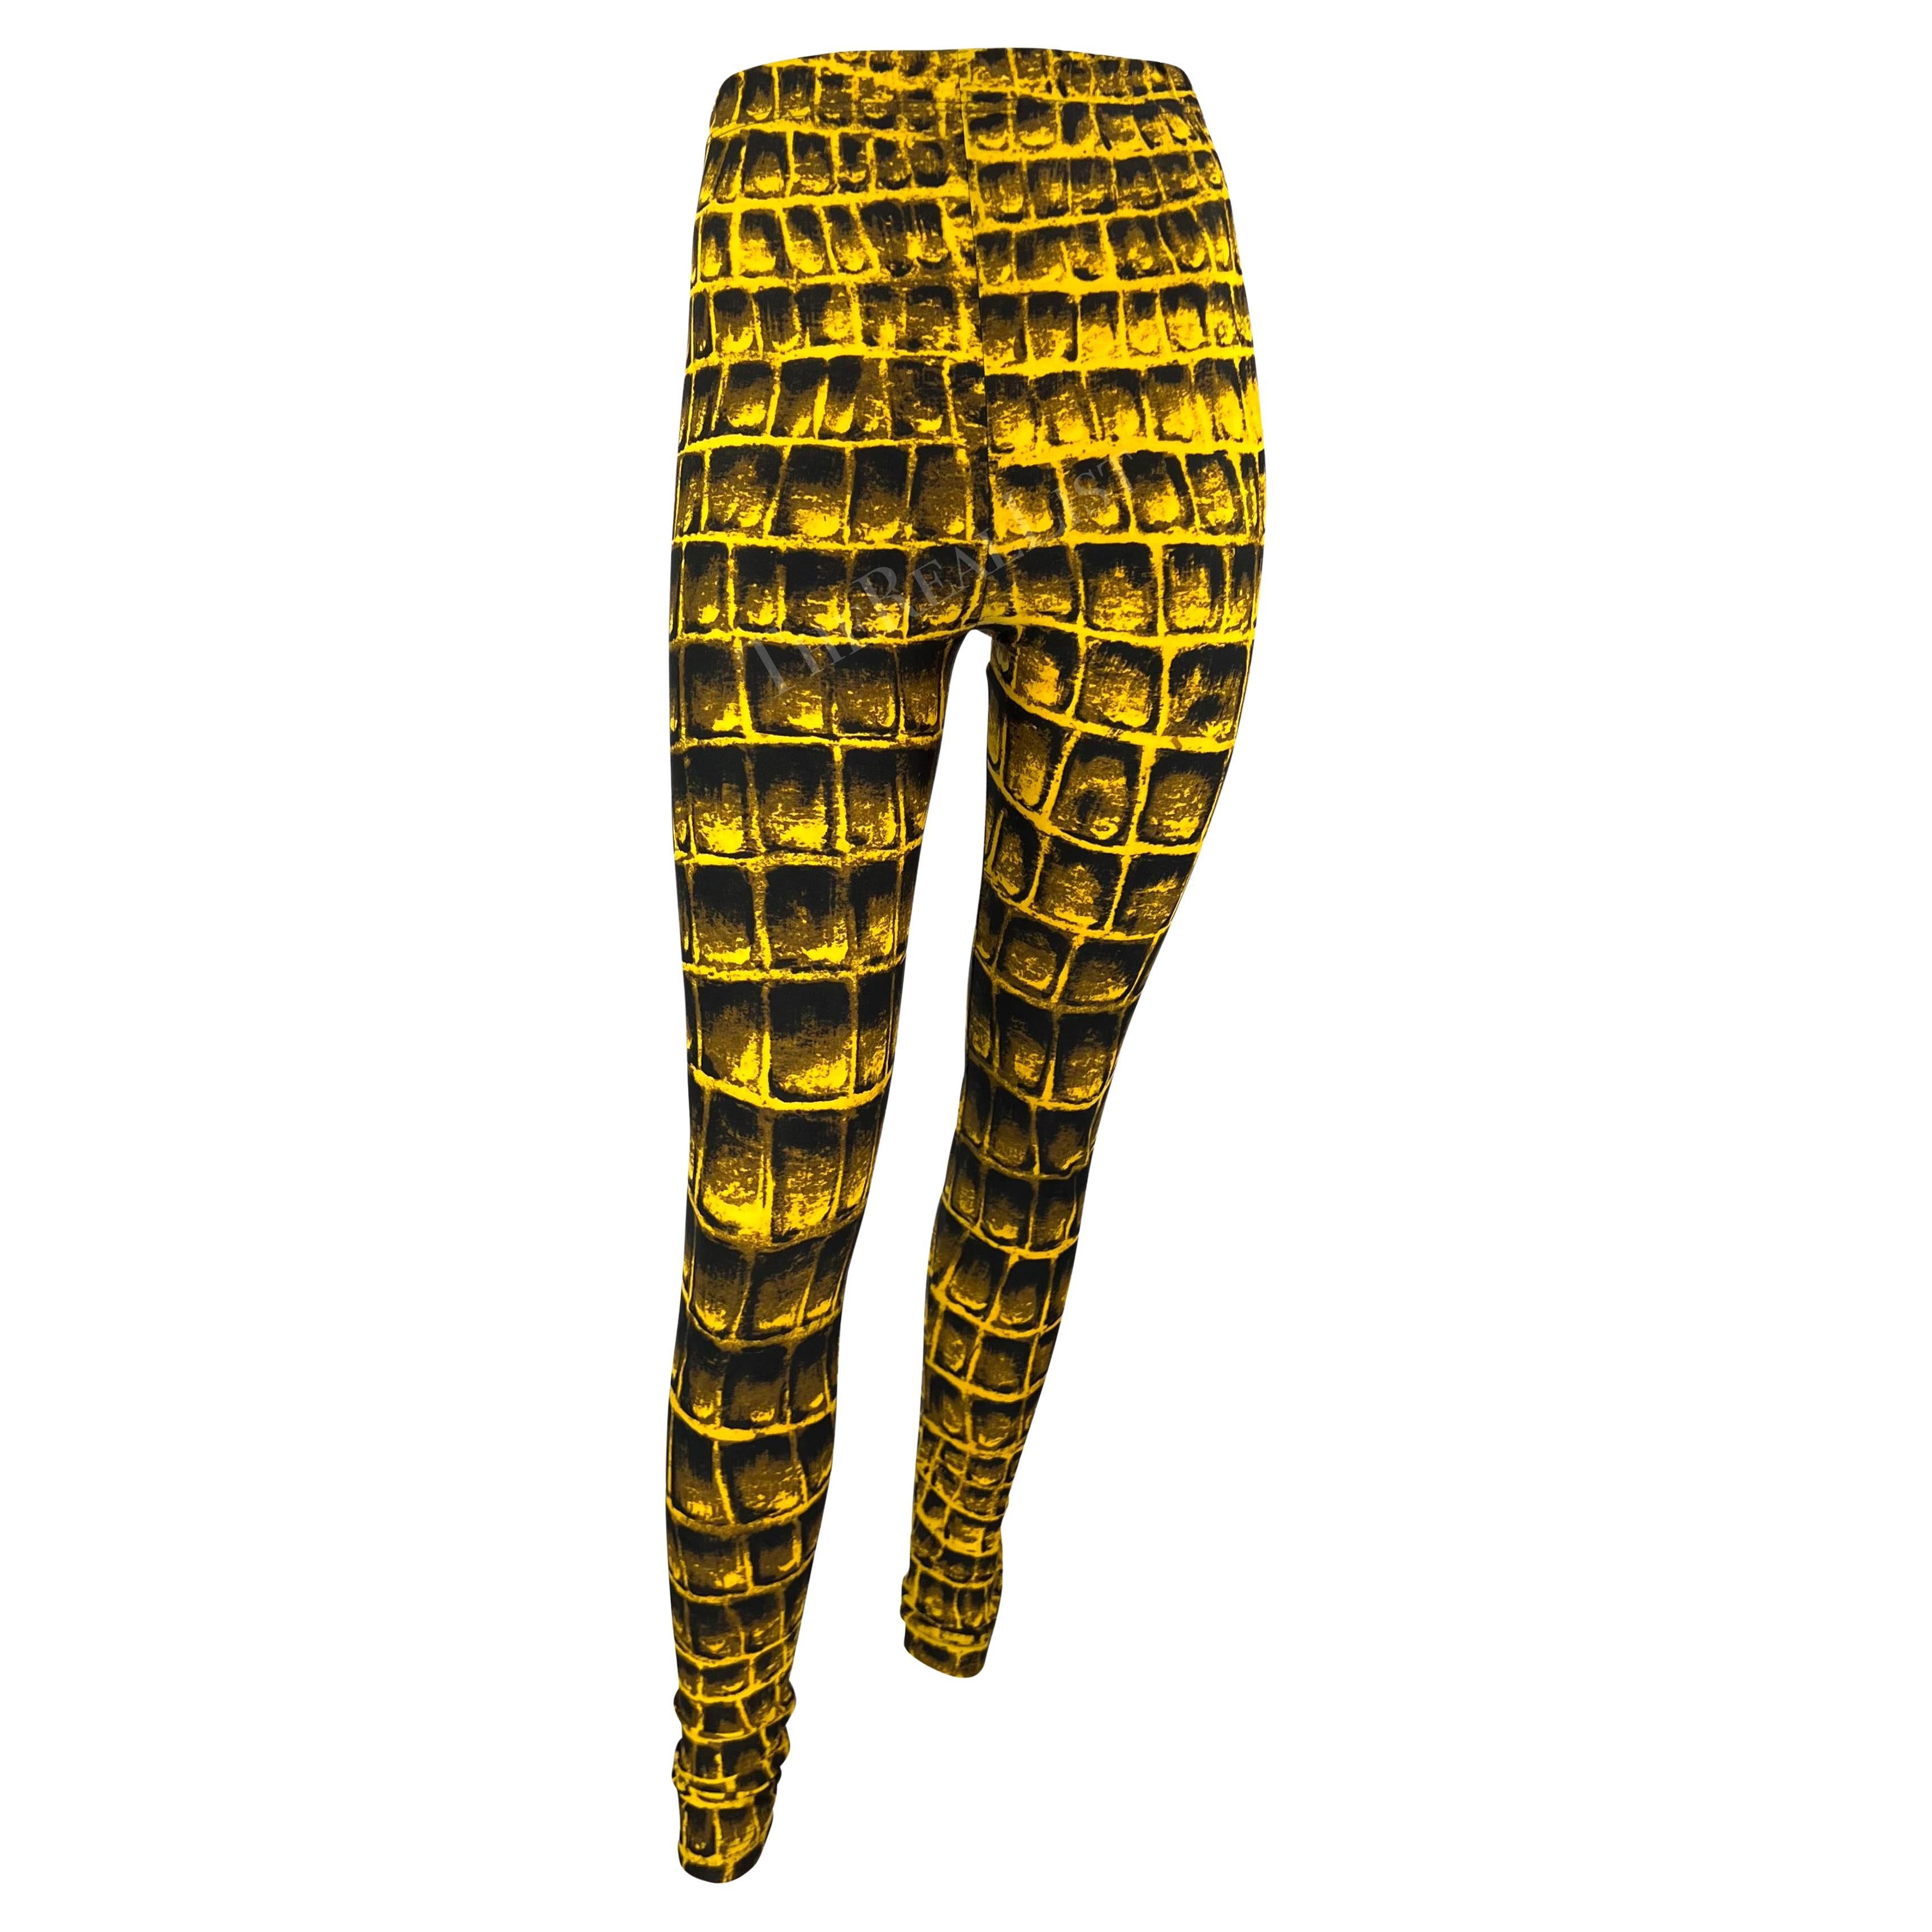 S/S 1992 Gianni Versace Runway Yellow Black Crocodile Print Leggings Tights For Sale